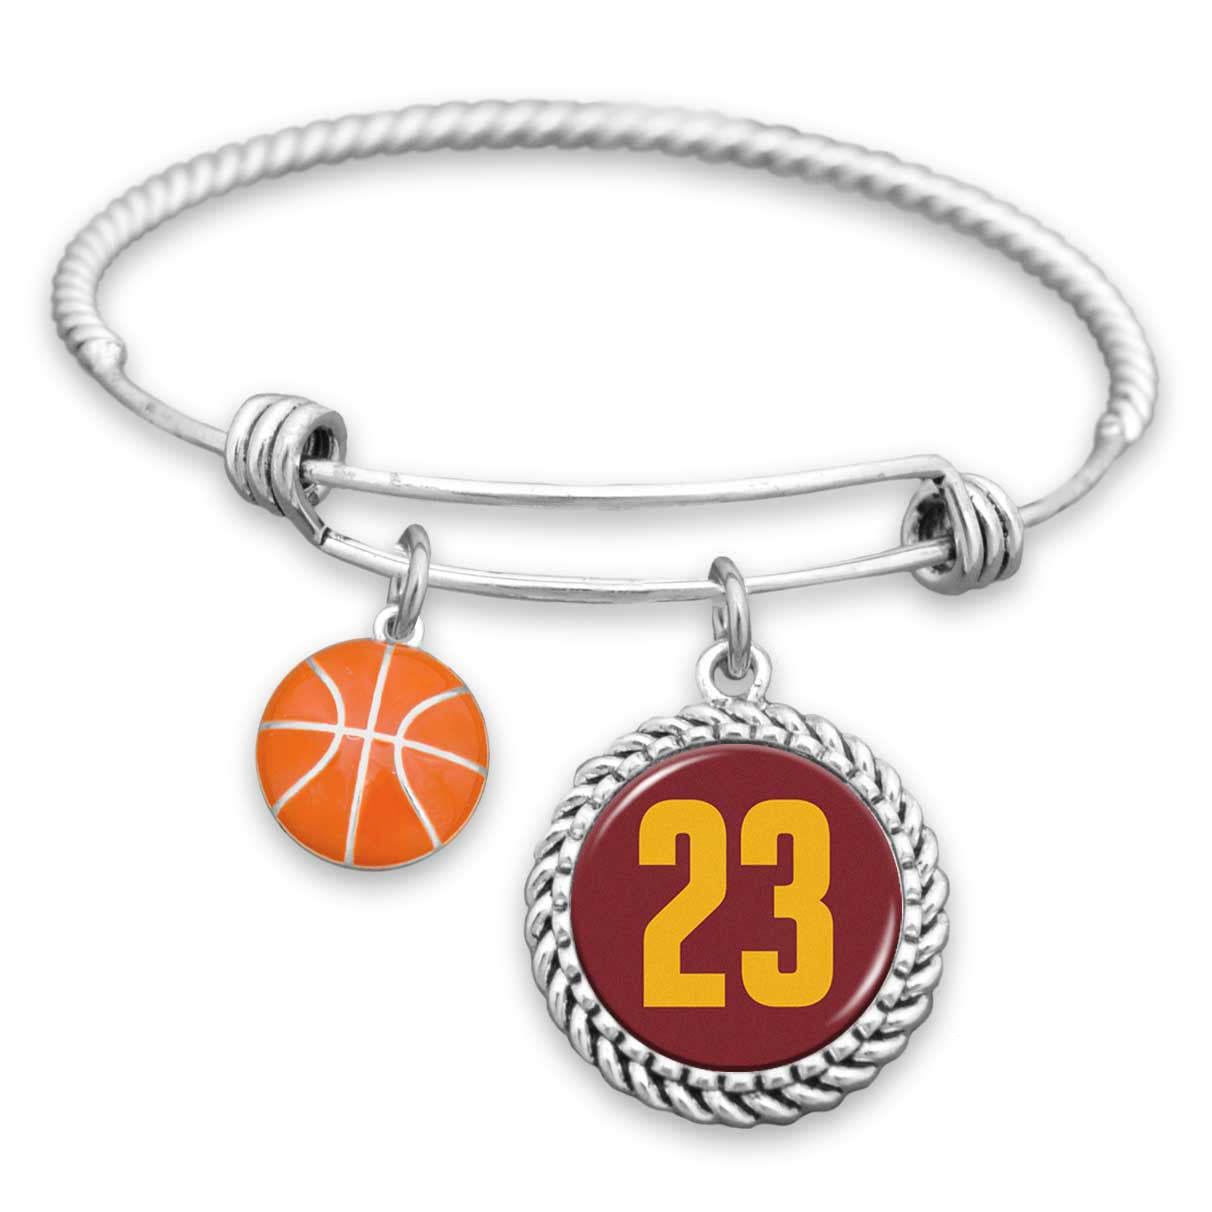 Cleveland Basketball #23 Charm Bracelet